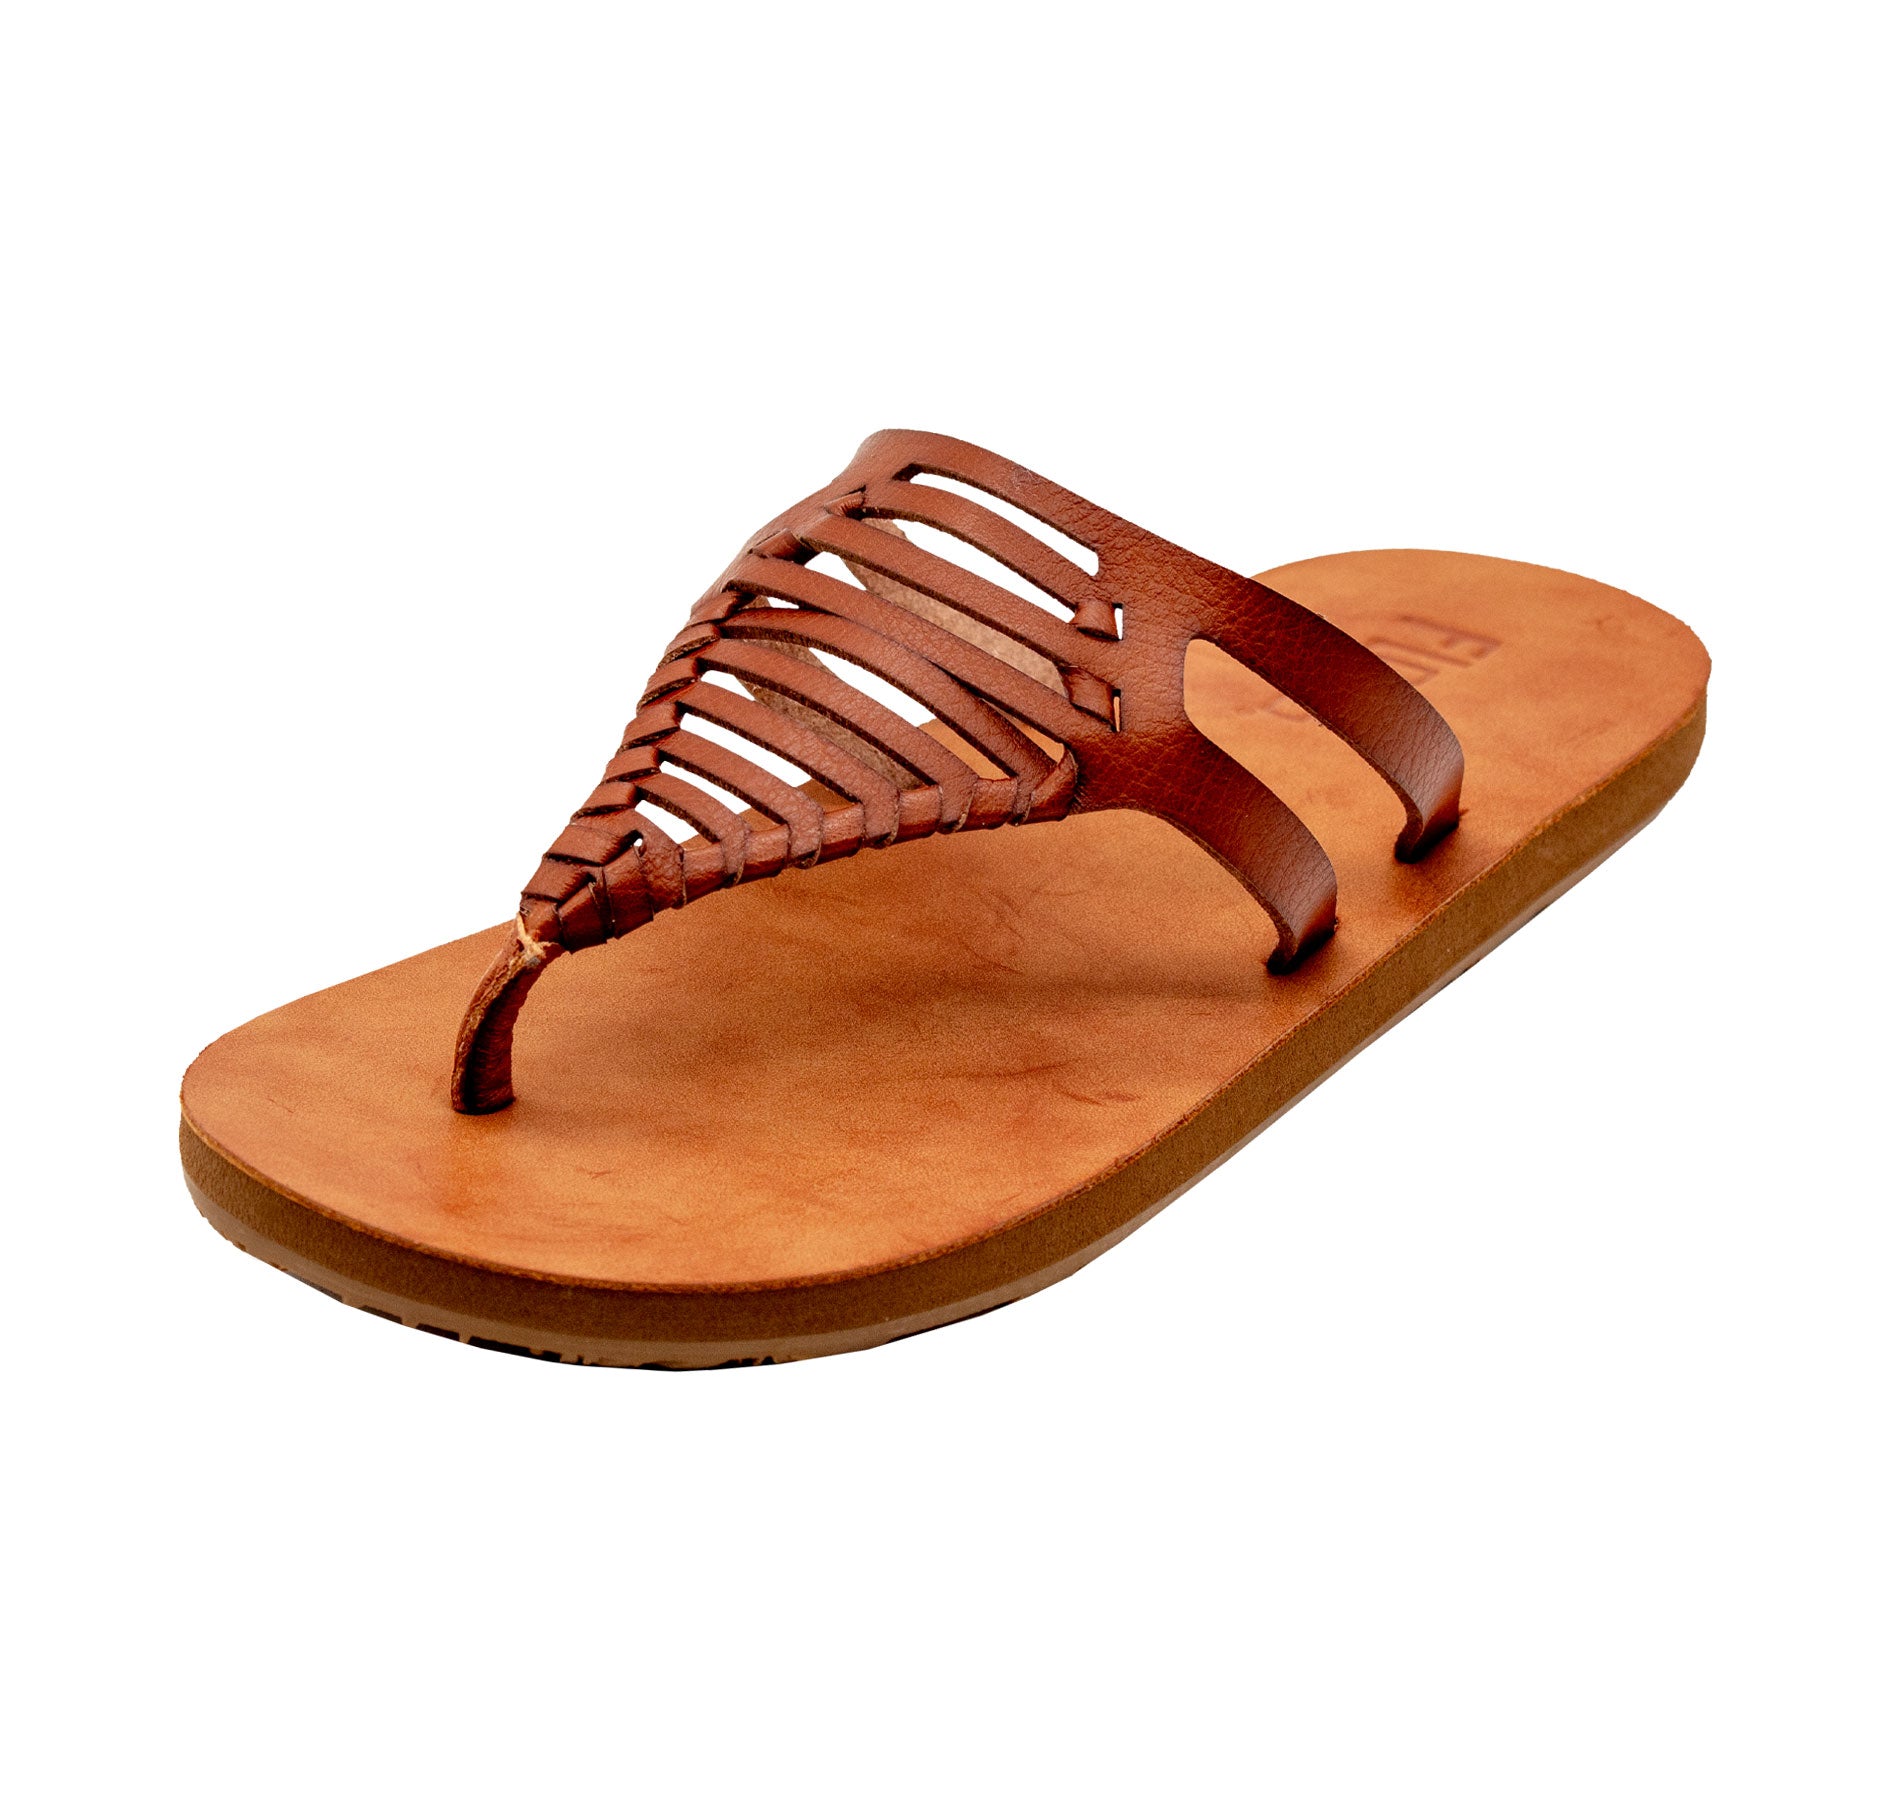 Pajaro - Women's Sandal